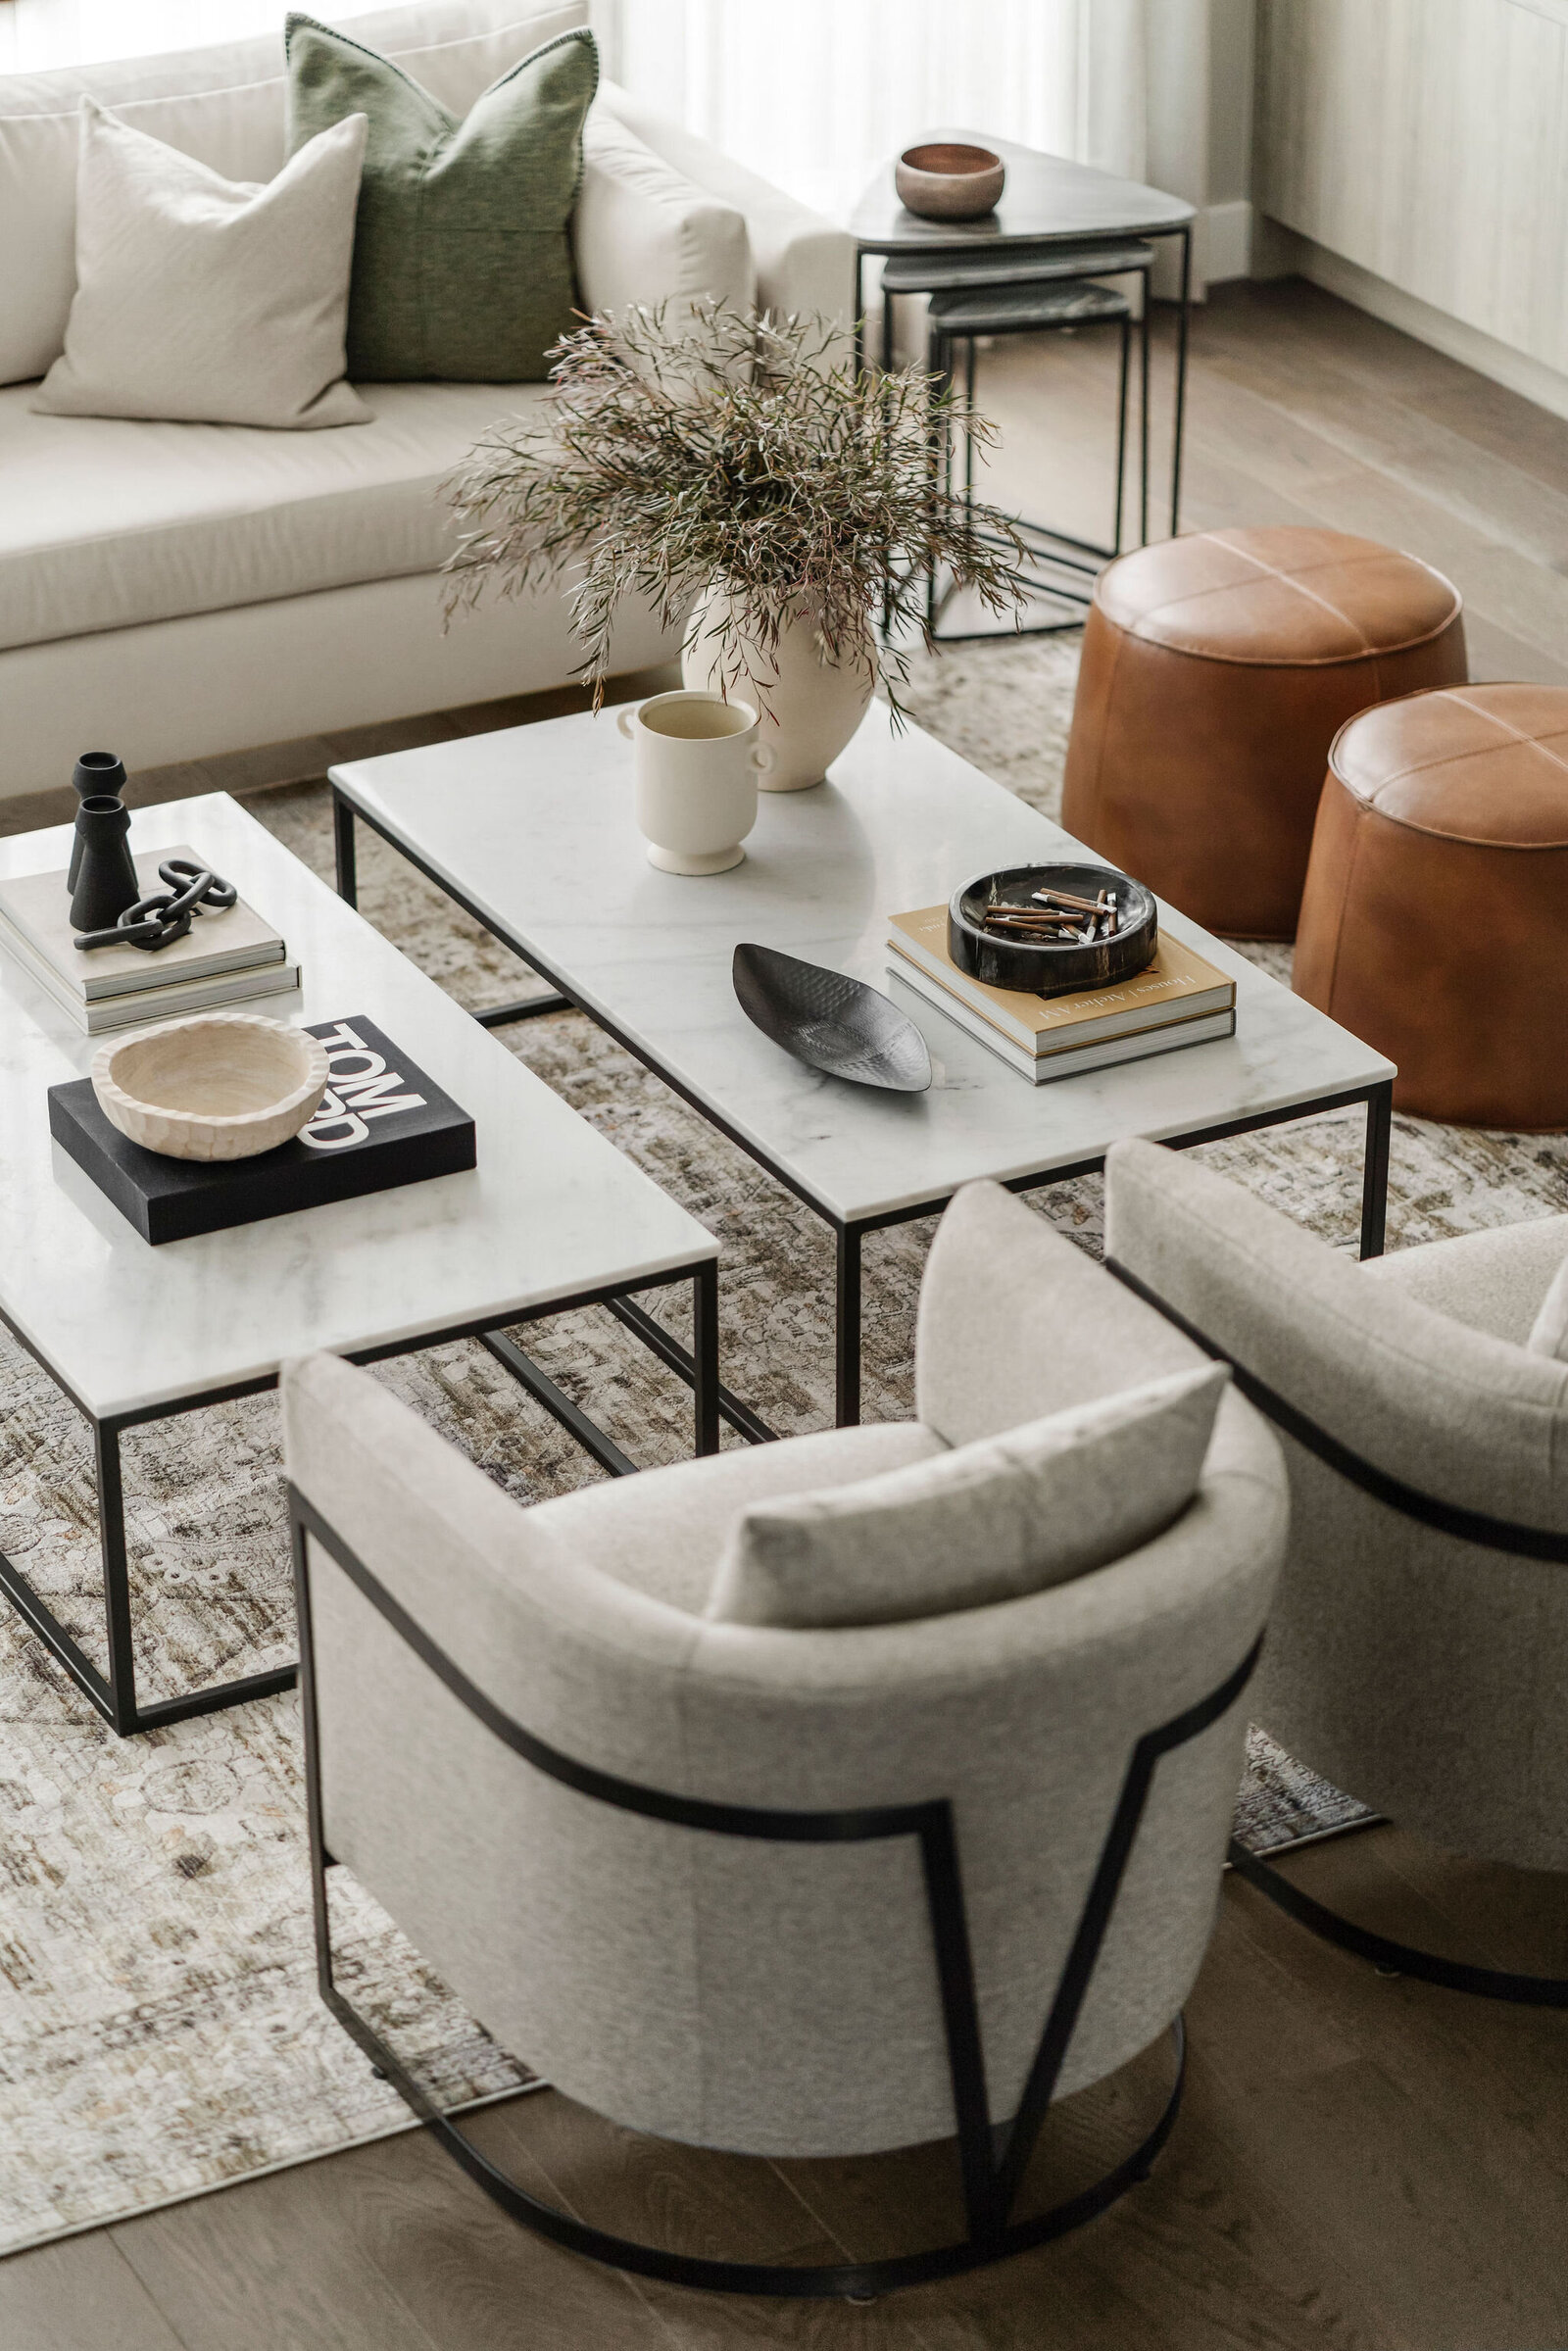 Living Room - Chairs - Coffee Table - Furnishings - Calgary